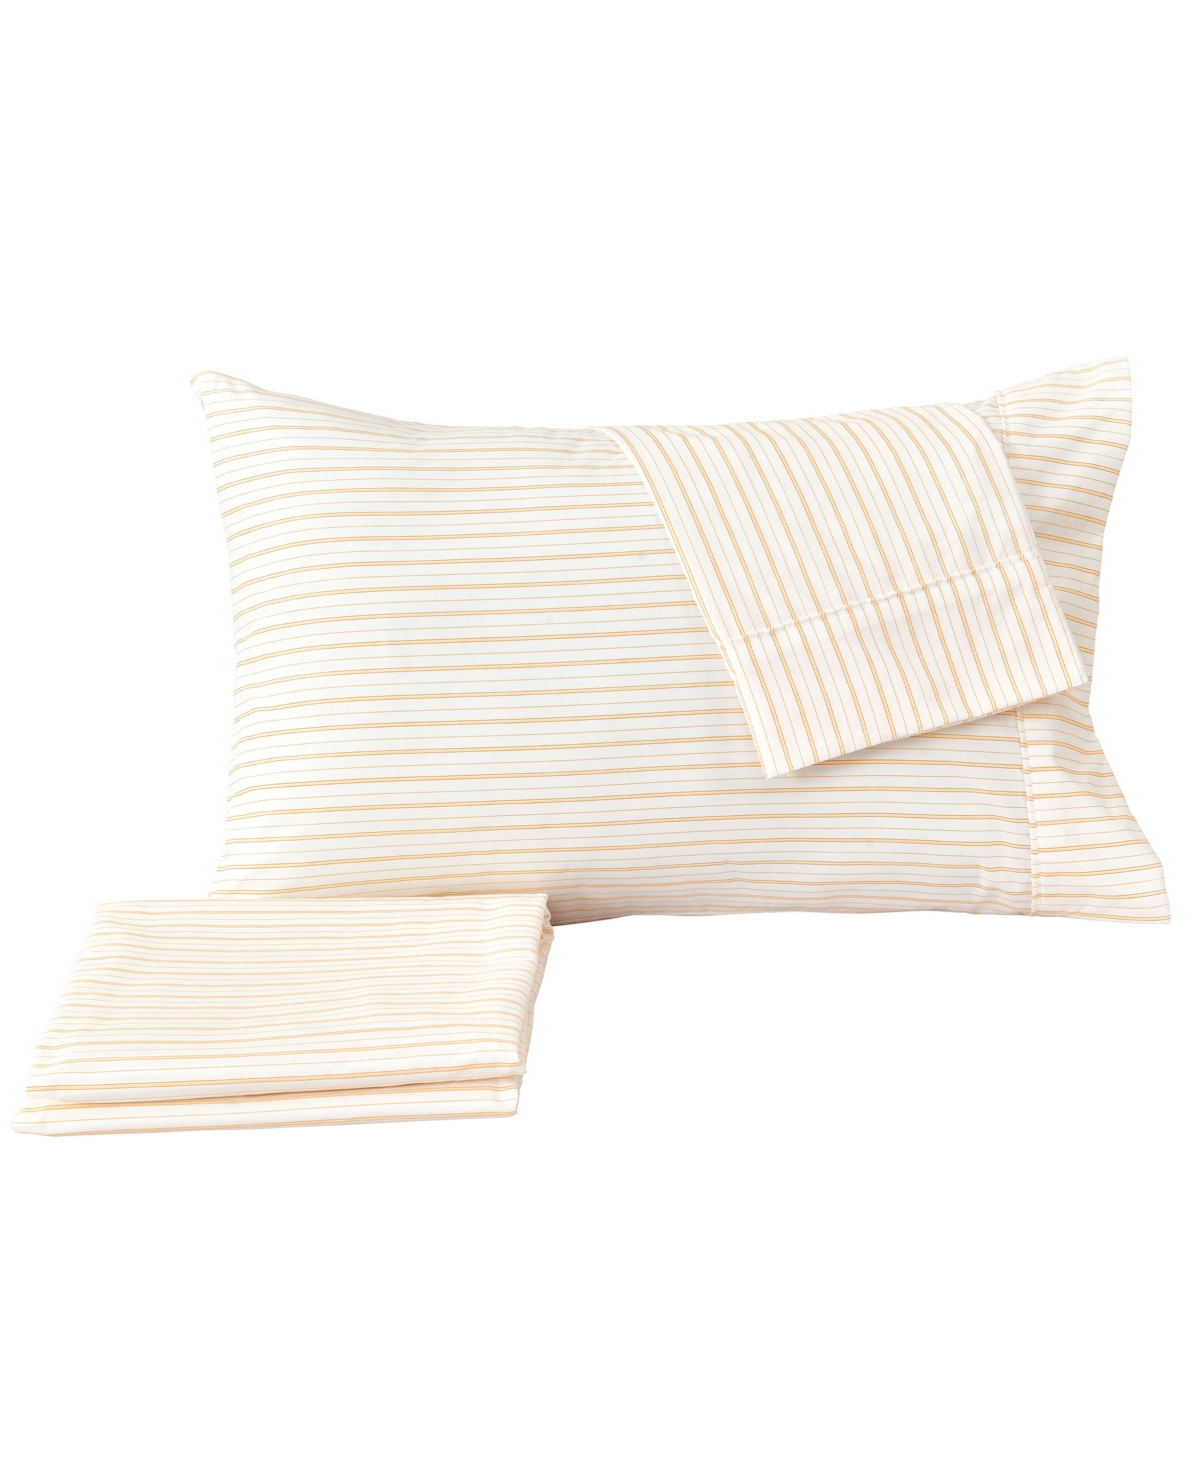 Premium Comforts Striped Microfiber Crease Resistant 4 Piece Sheet Set, Full In Marigold